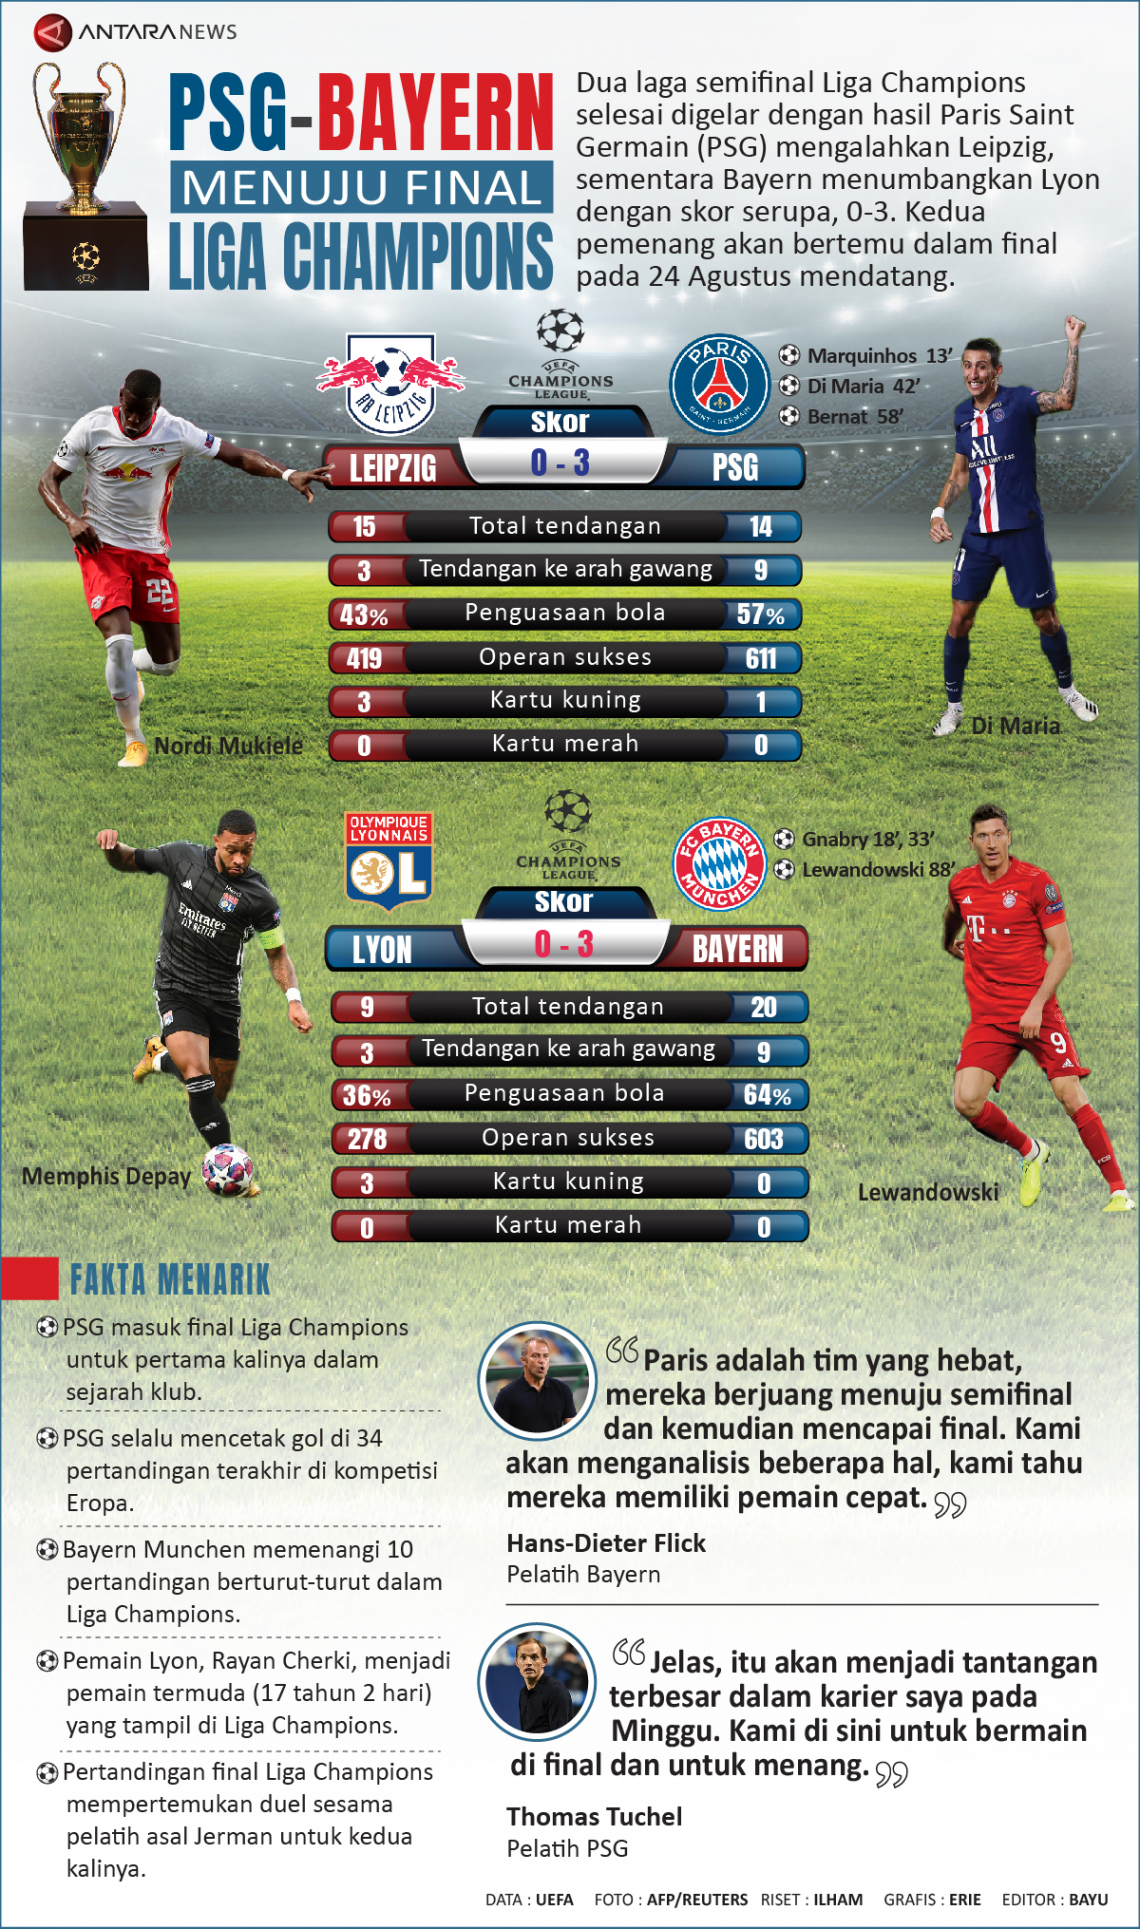 PSG-Bayern menuju final Liga Champions